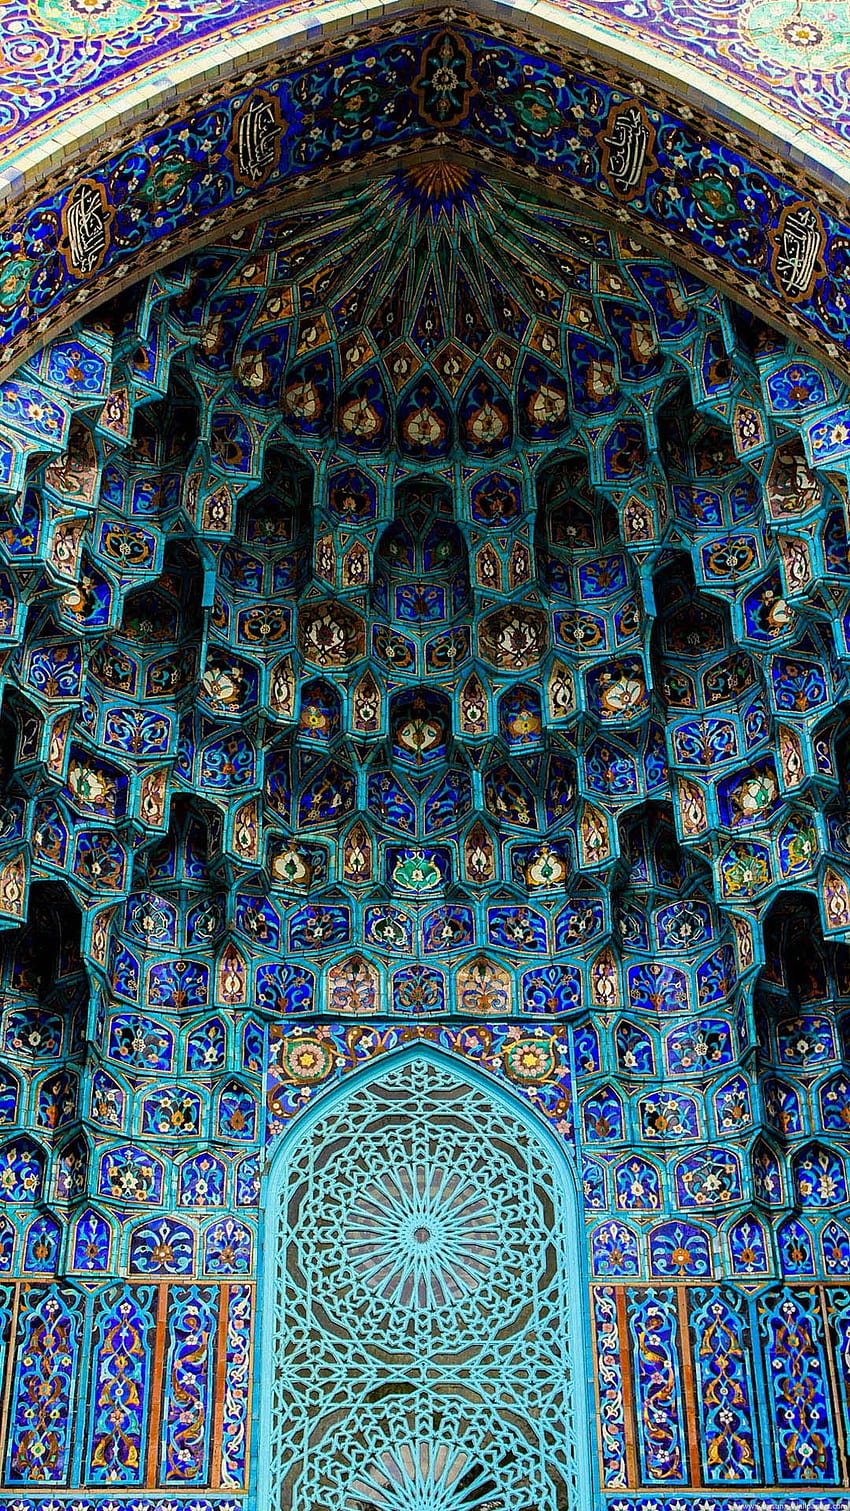 arte islâmica, lugares sagrados, azul, cúpula, arquitetura, simetria, pintura islâmica Papel de parede de celular HD